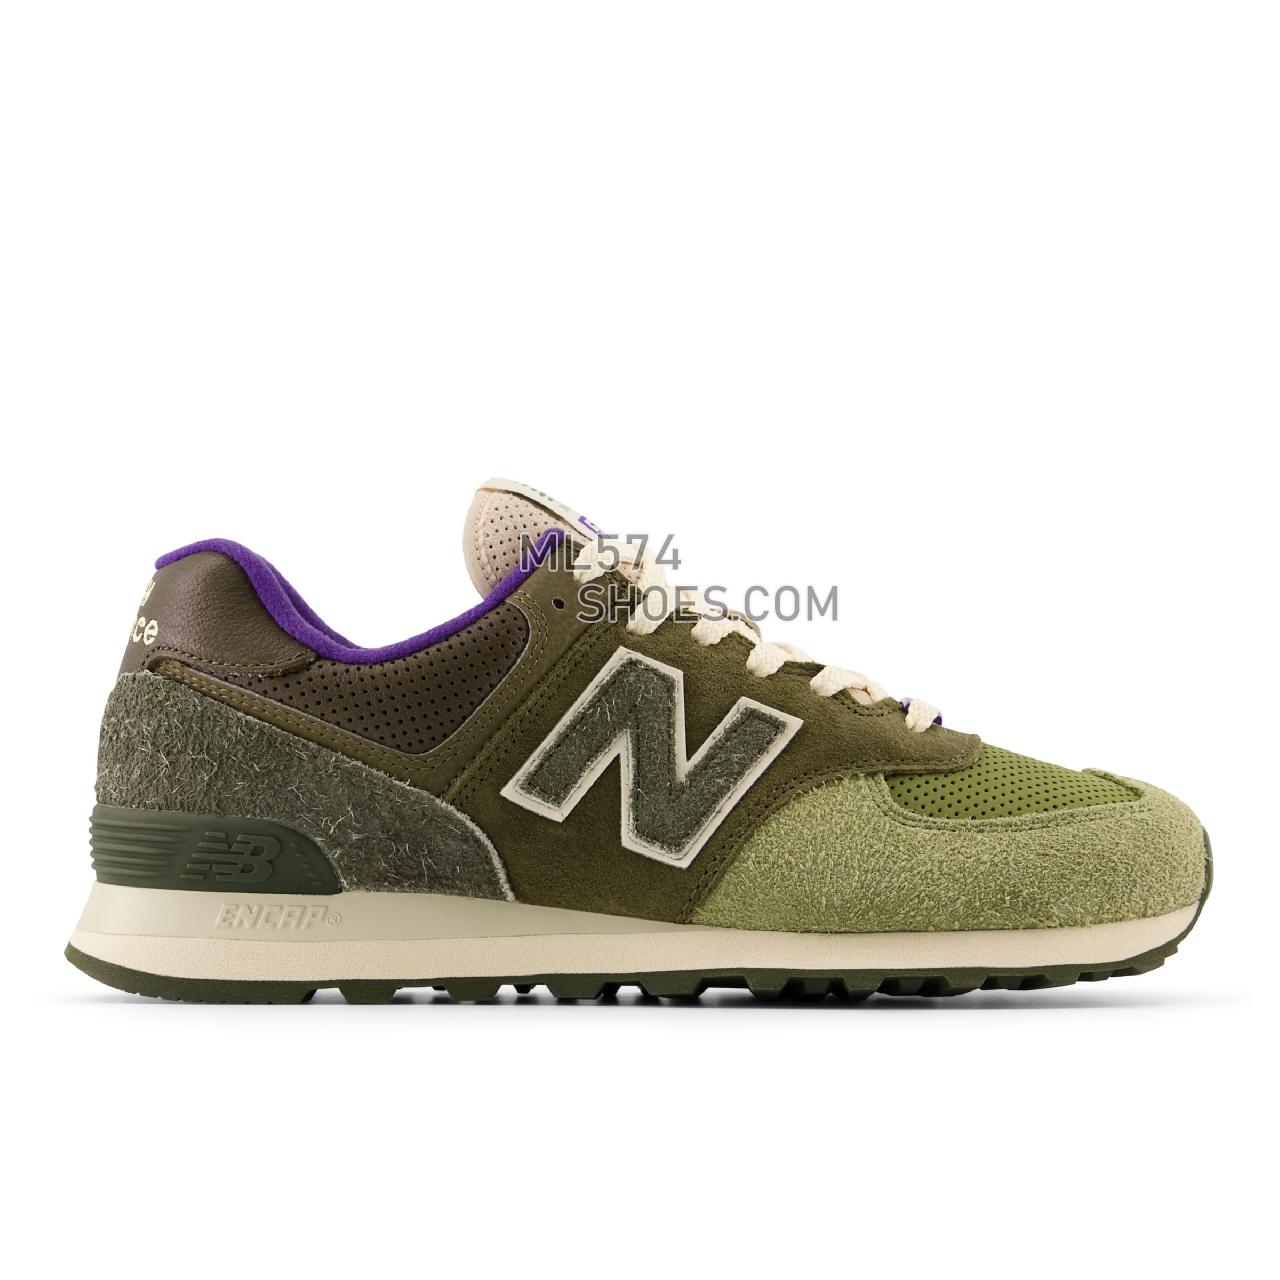 New Balance Sneakersnstuff 574 - Unisex Men's Women's Classic Sneakers - Green with Purple - ML574NS2